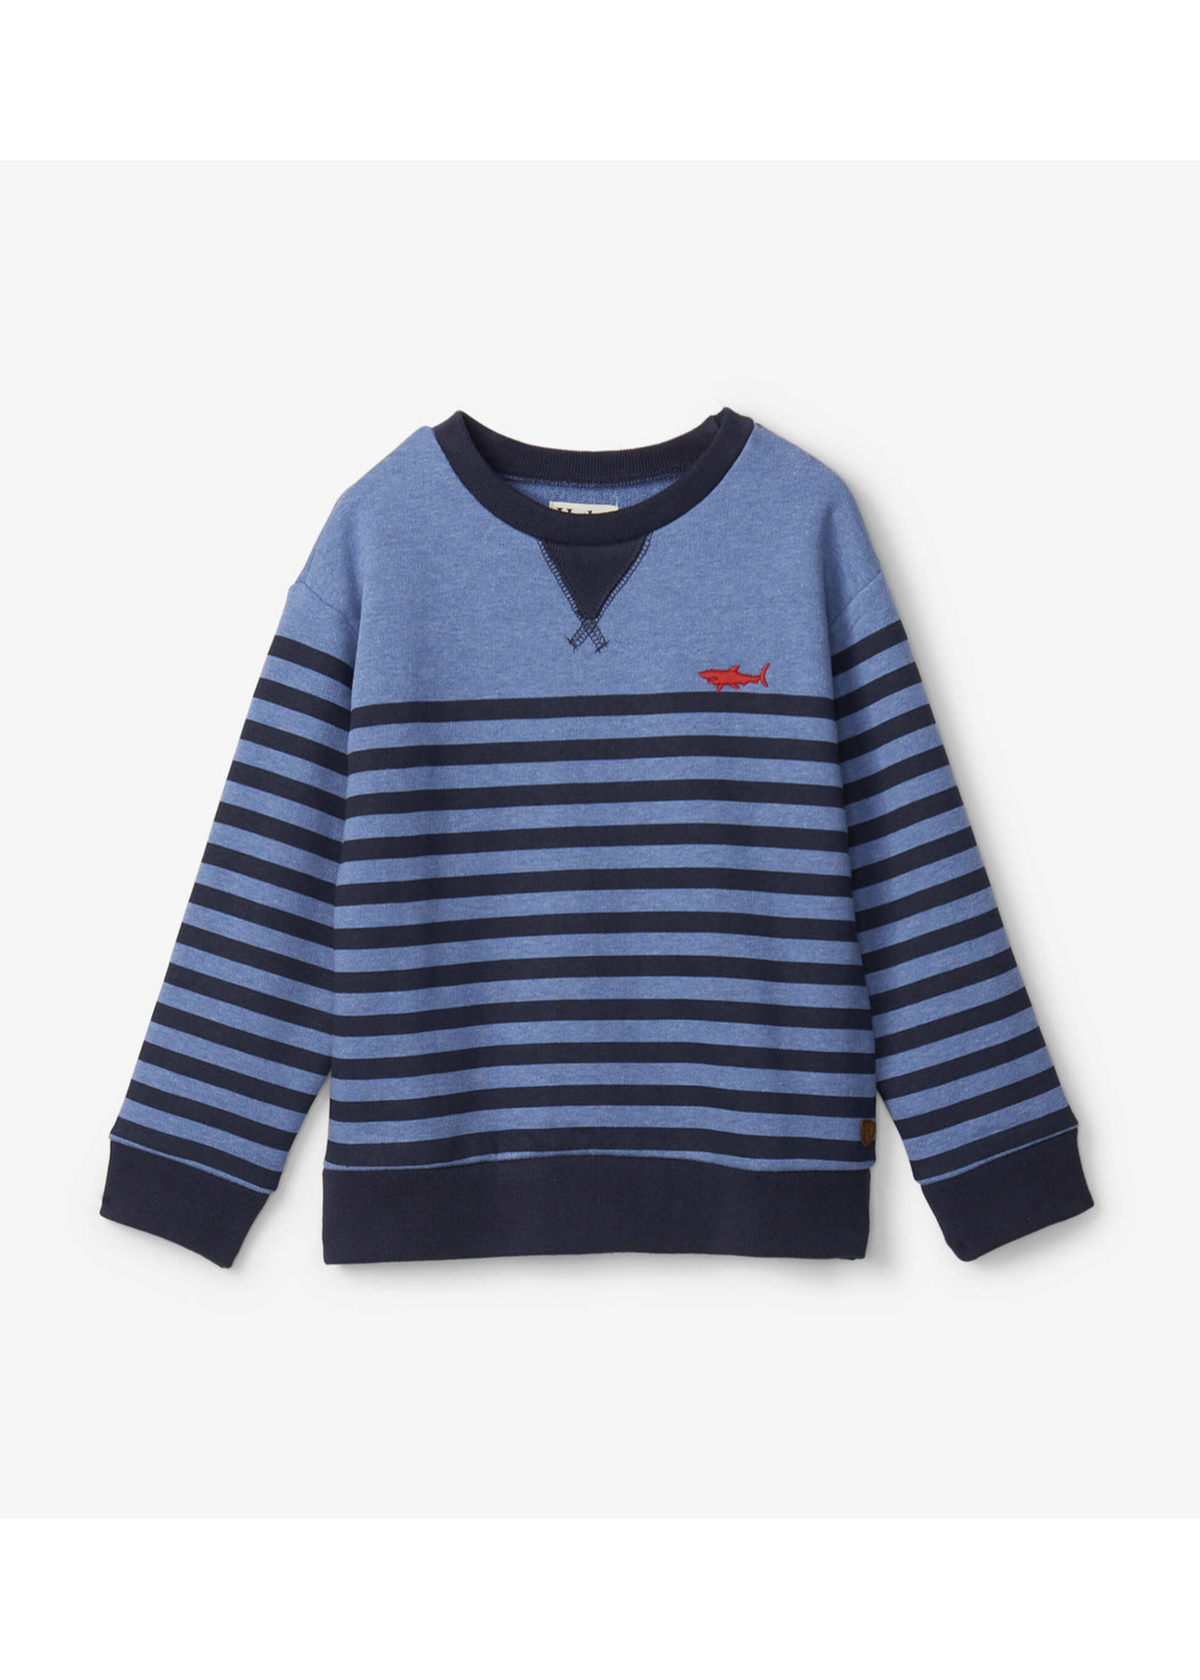 Hatley Printed Shark Stripes Pullover Sweatshirt and Toddler Hoddies